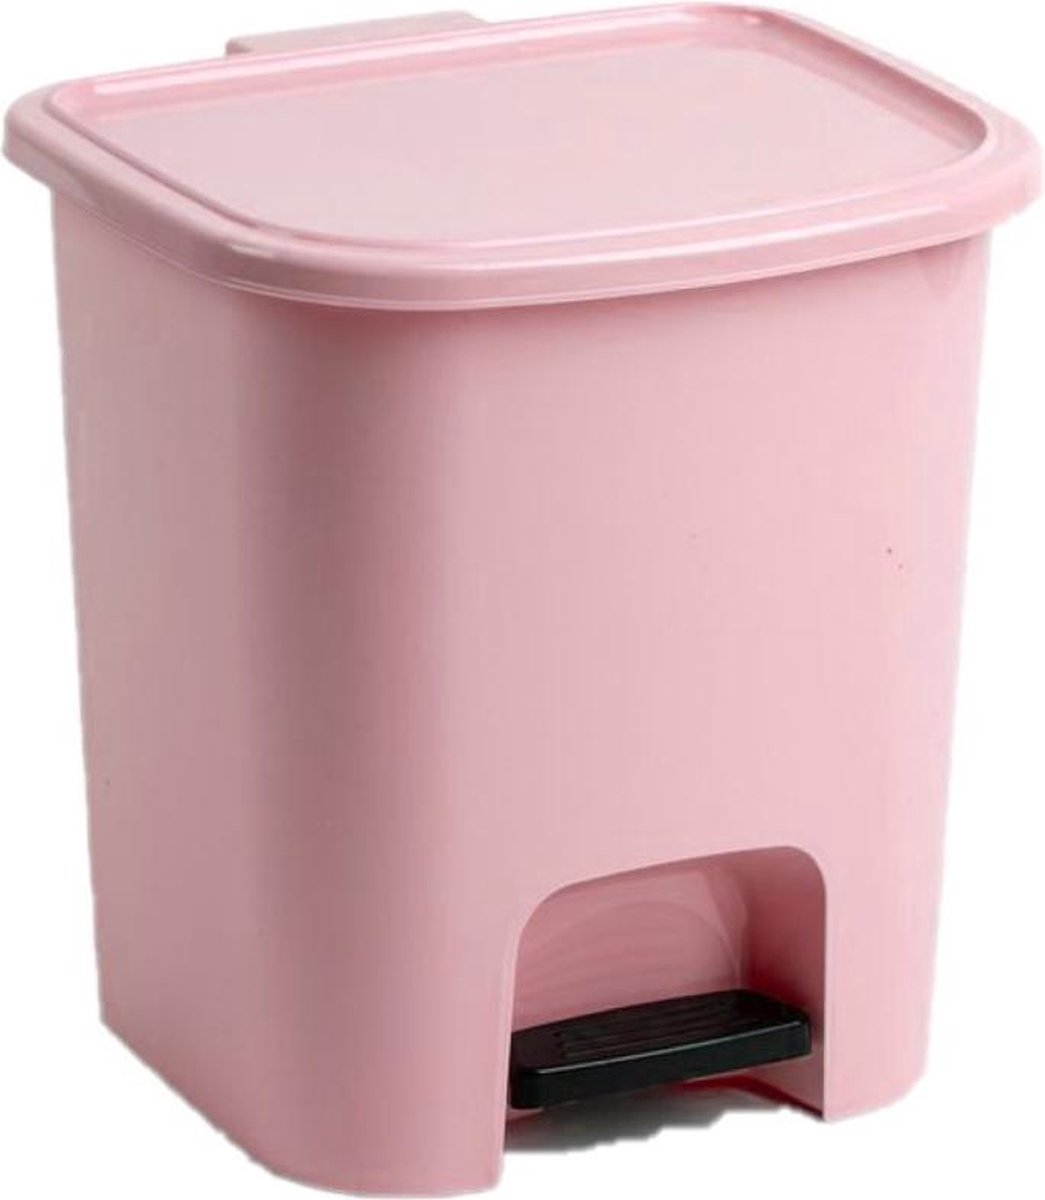 Kunststof afvalemmers/vuilnisemmers/pedaalemmers in het roze van 7.5 liter deksel en pedaal 24 x 22 x 25.5 cm